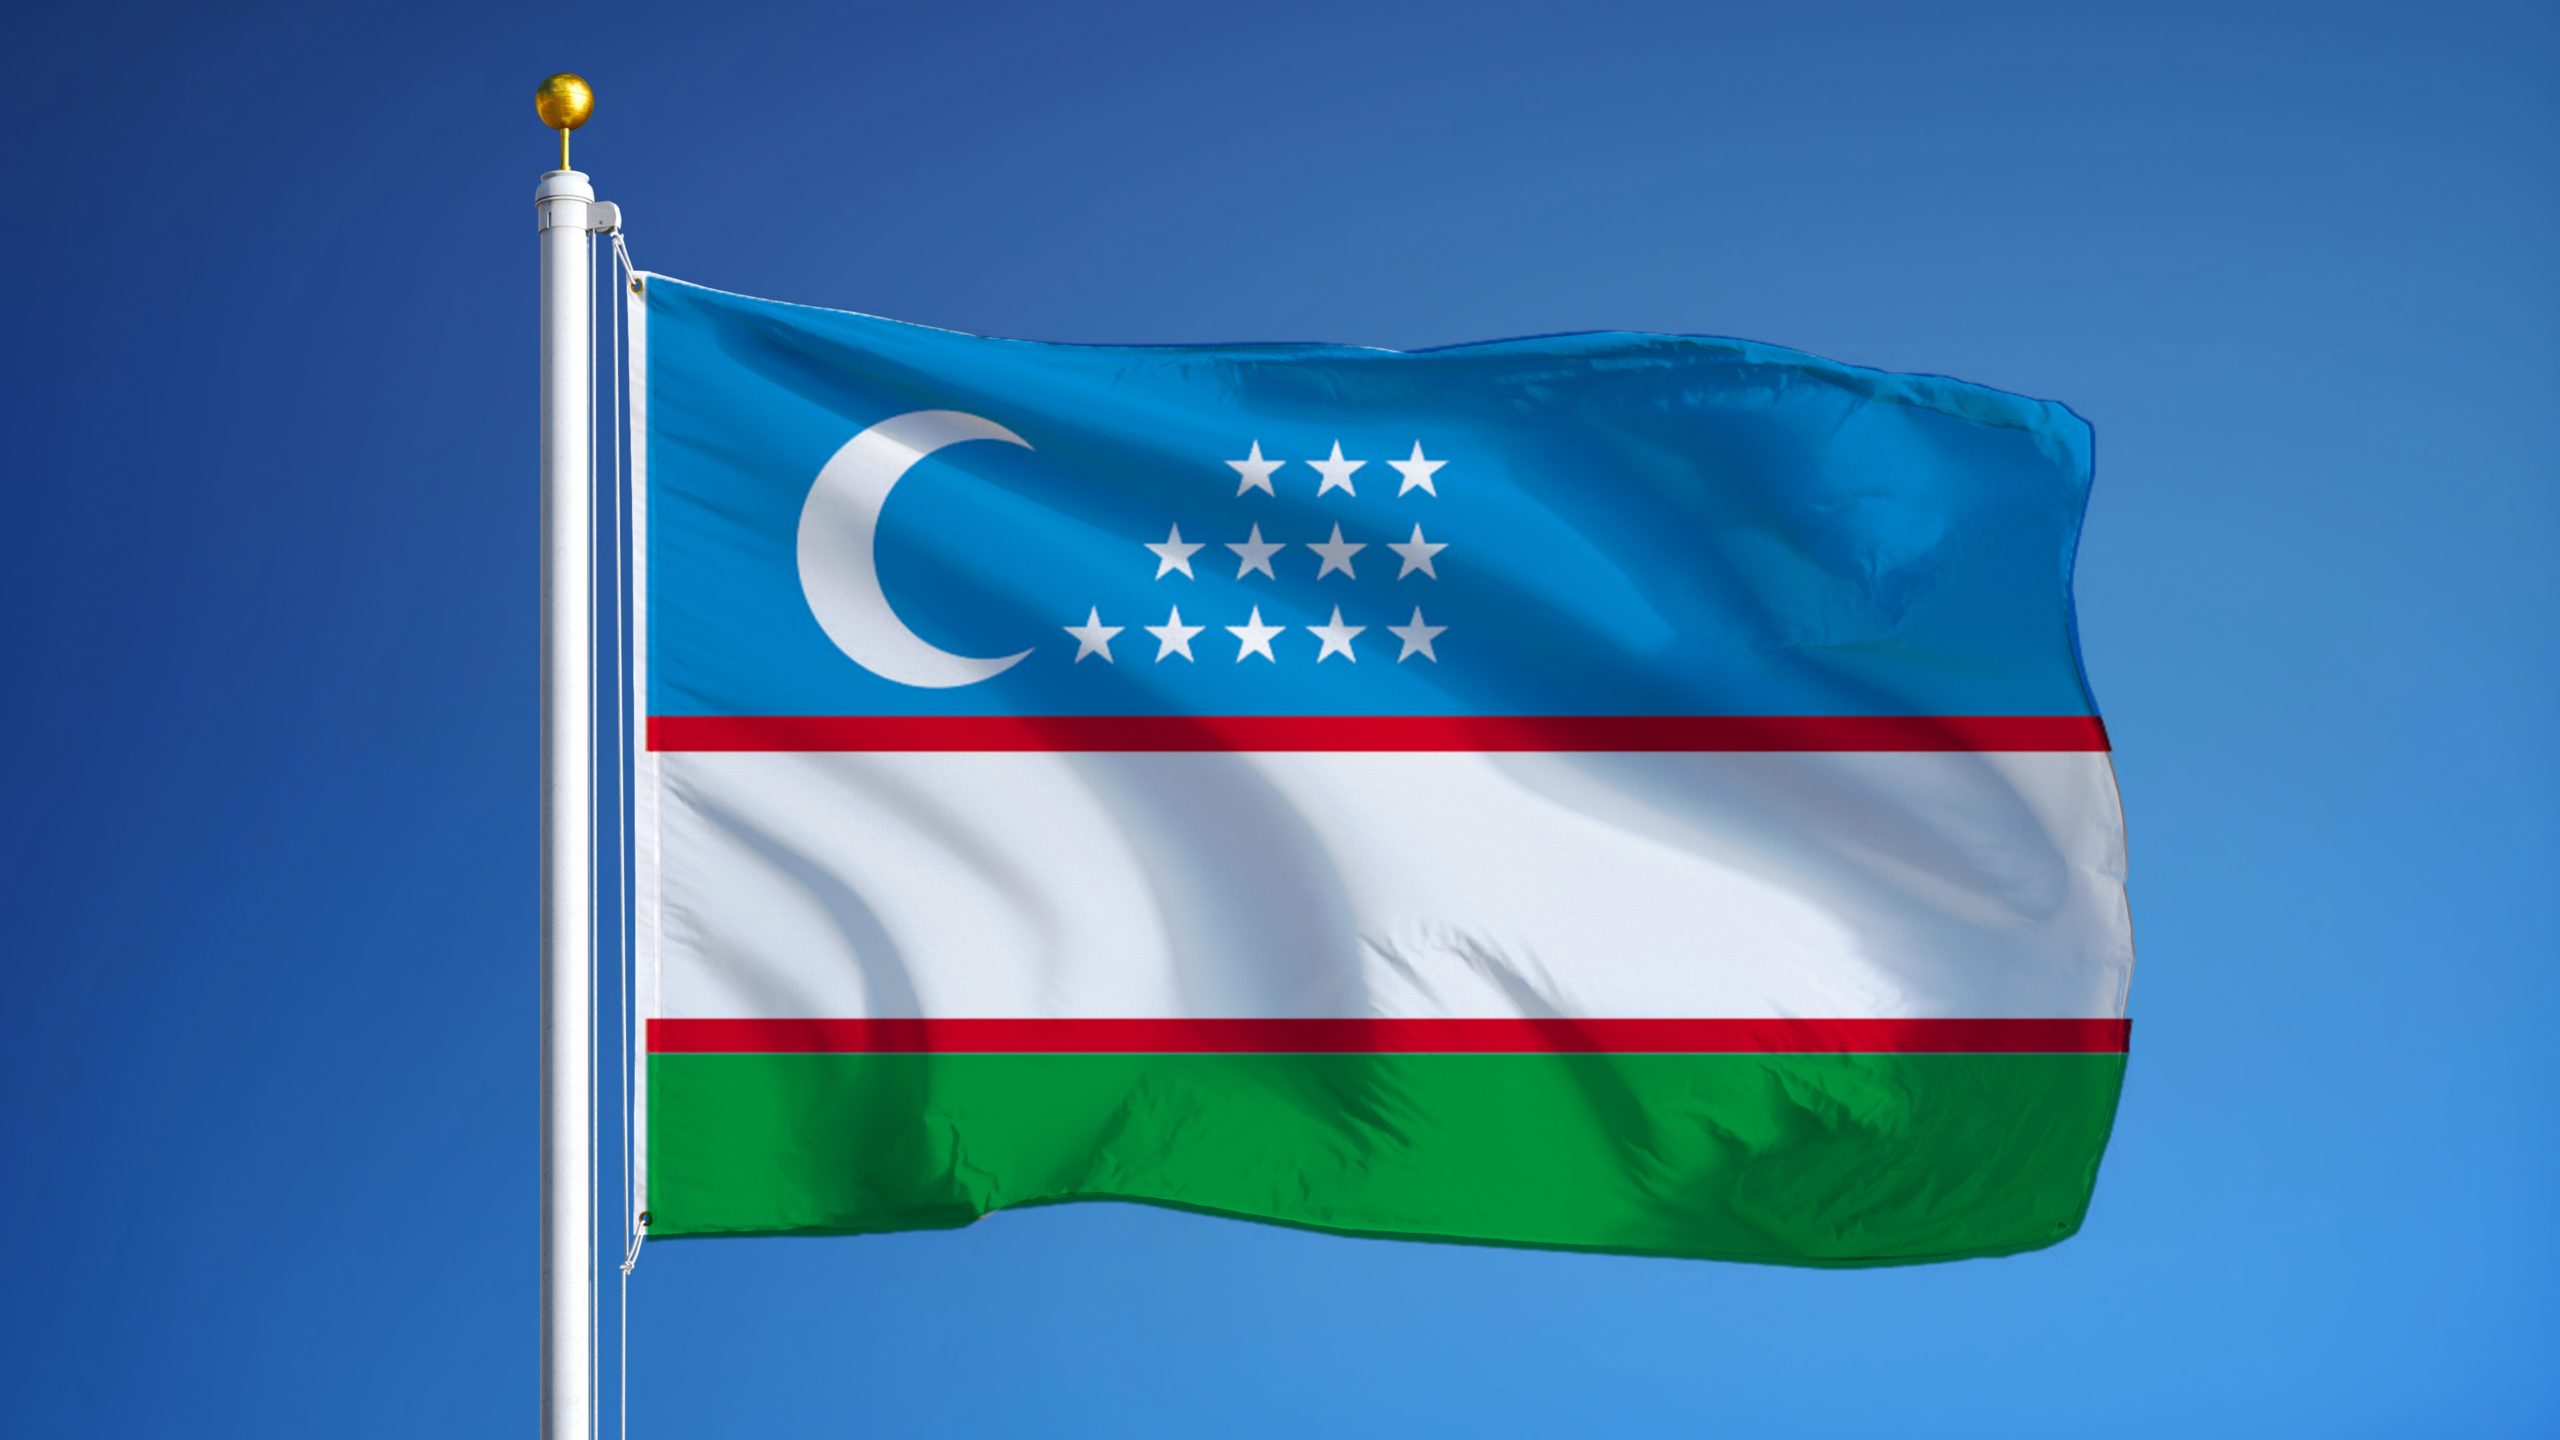 Узбекистан флаг. Флаг Республики Узбекистан. Узбекистан Республика БАЙРОГИ. Флаг Республики Узбекистан Штандарт. Узбекистан Байрак.